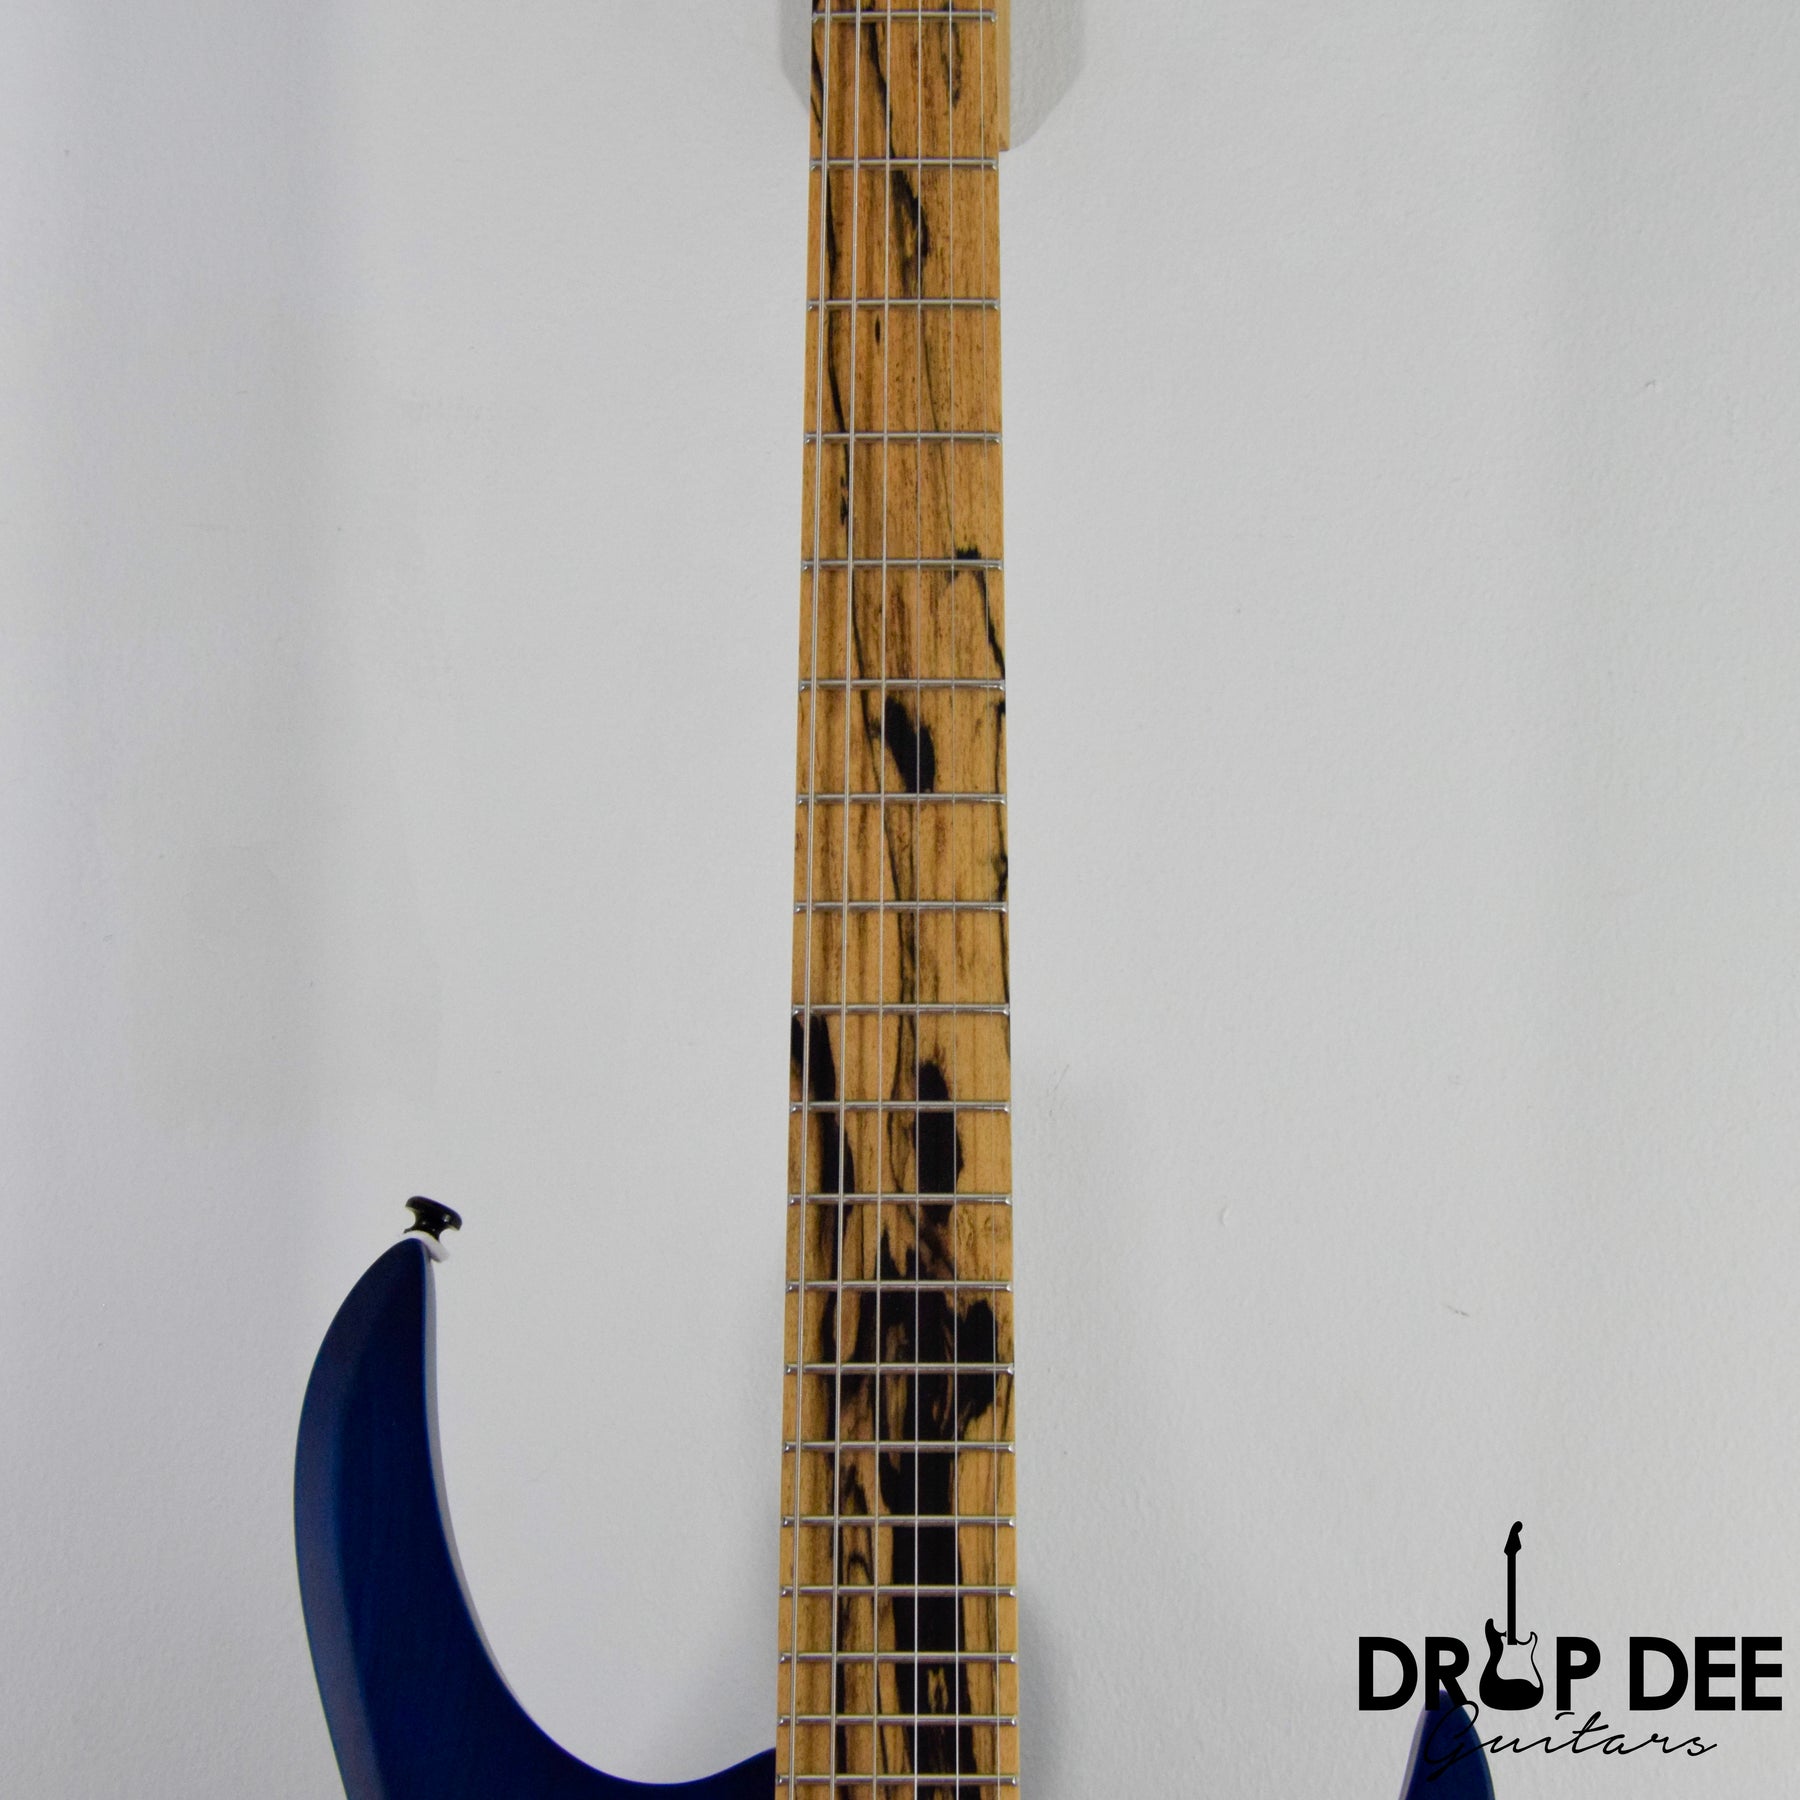 Balaguer DDG Exclusive Run Diablo Electric Guitar w/ Bag